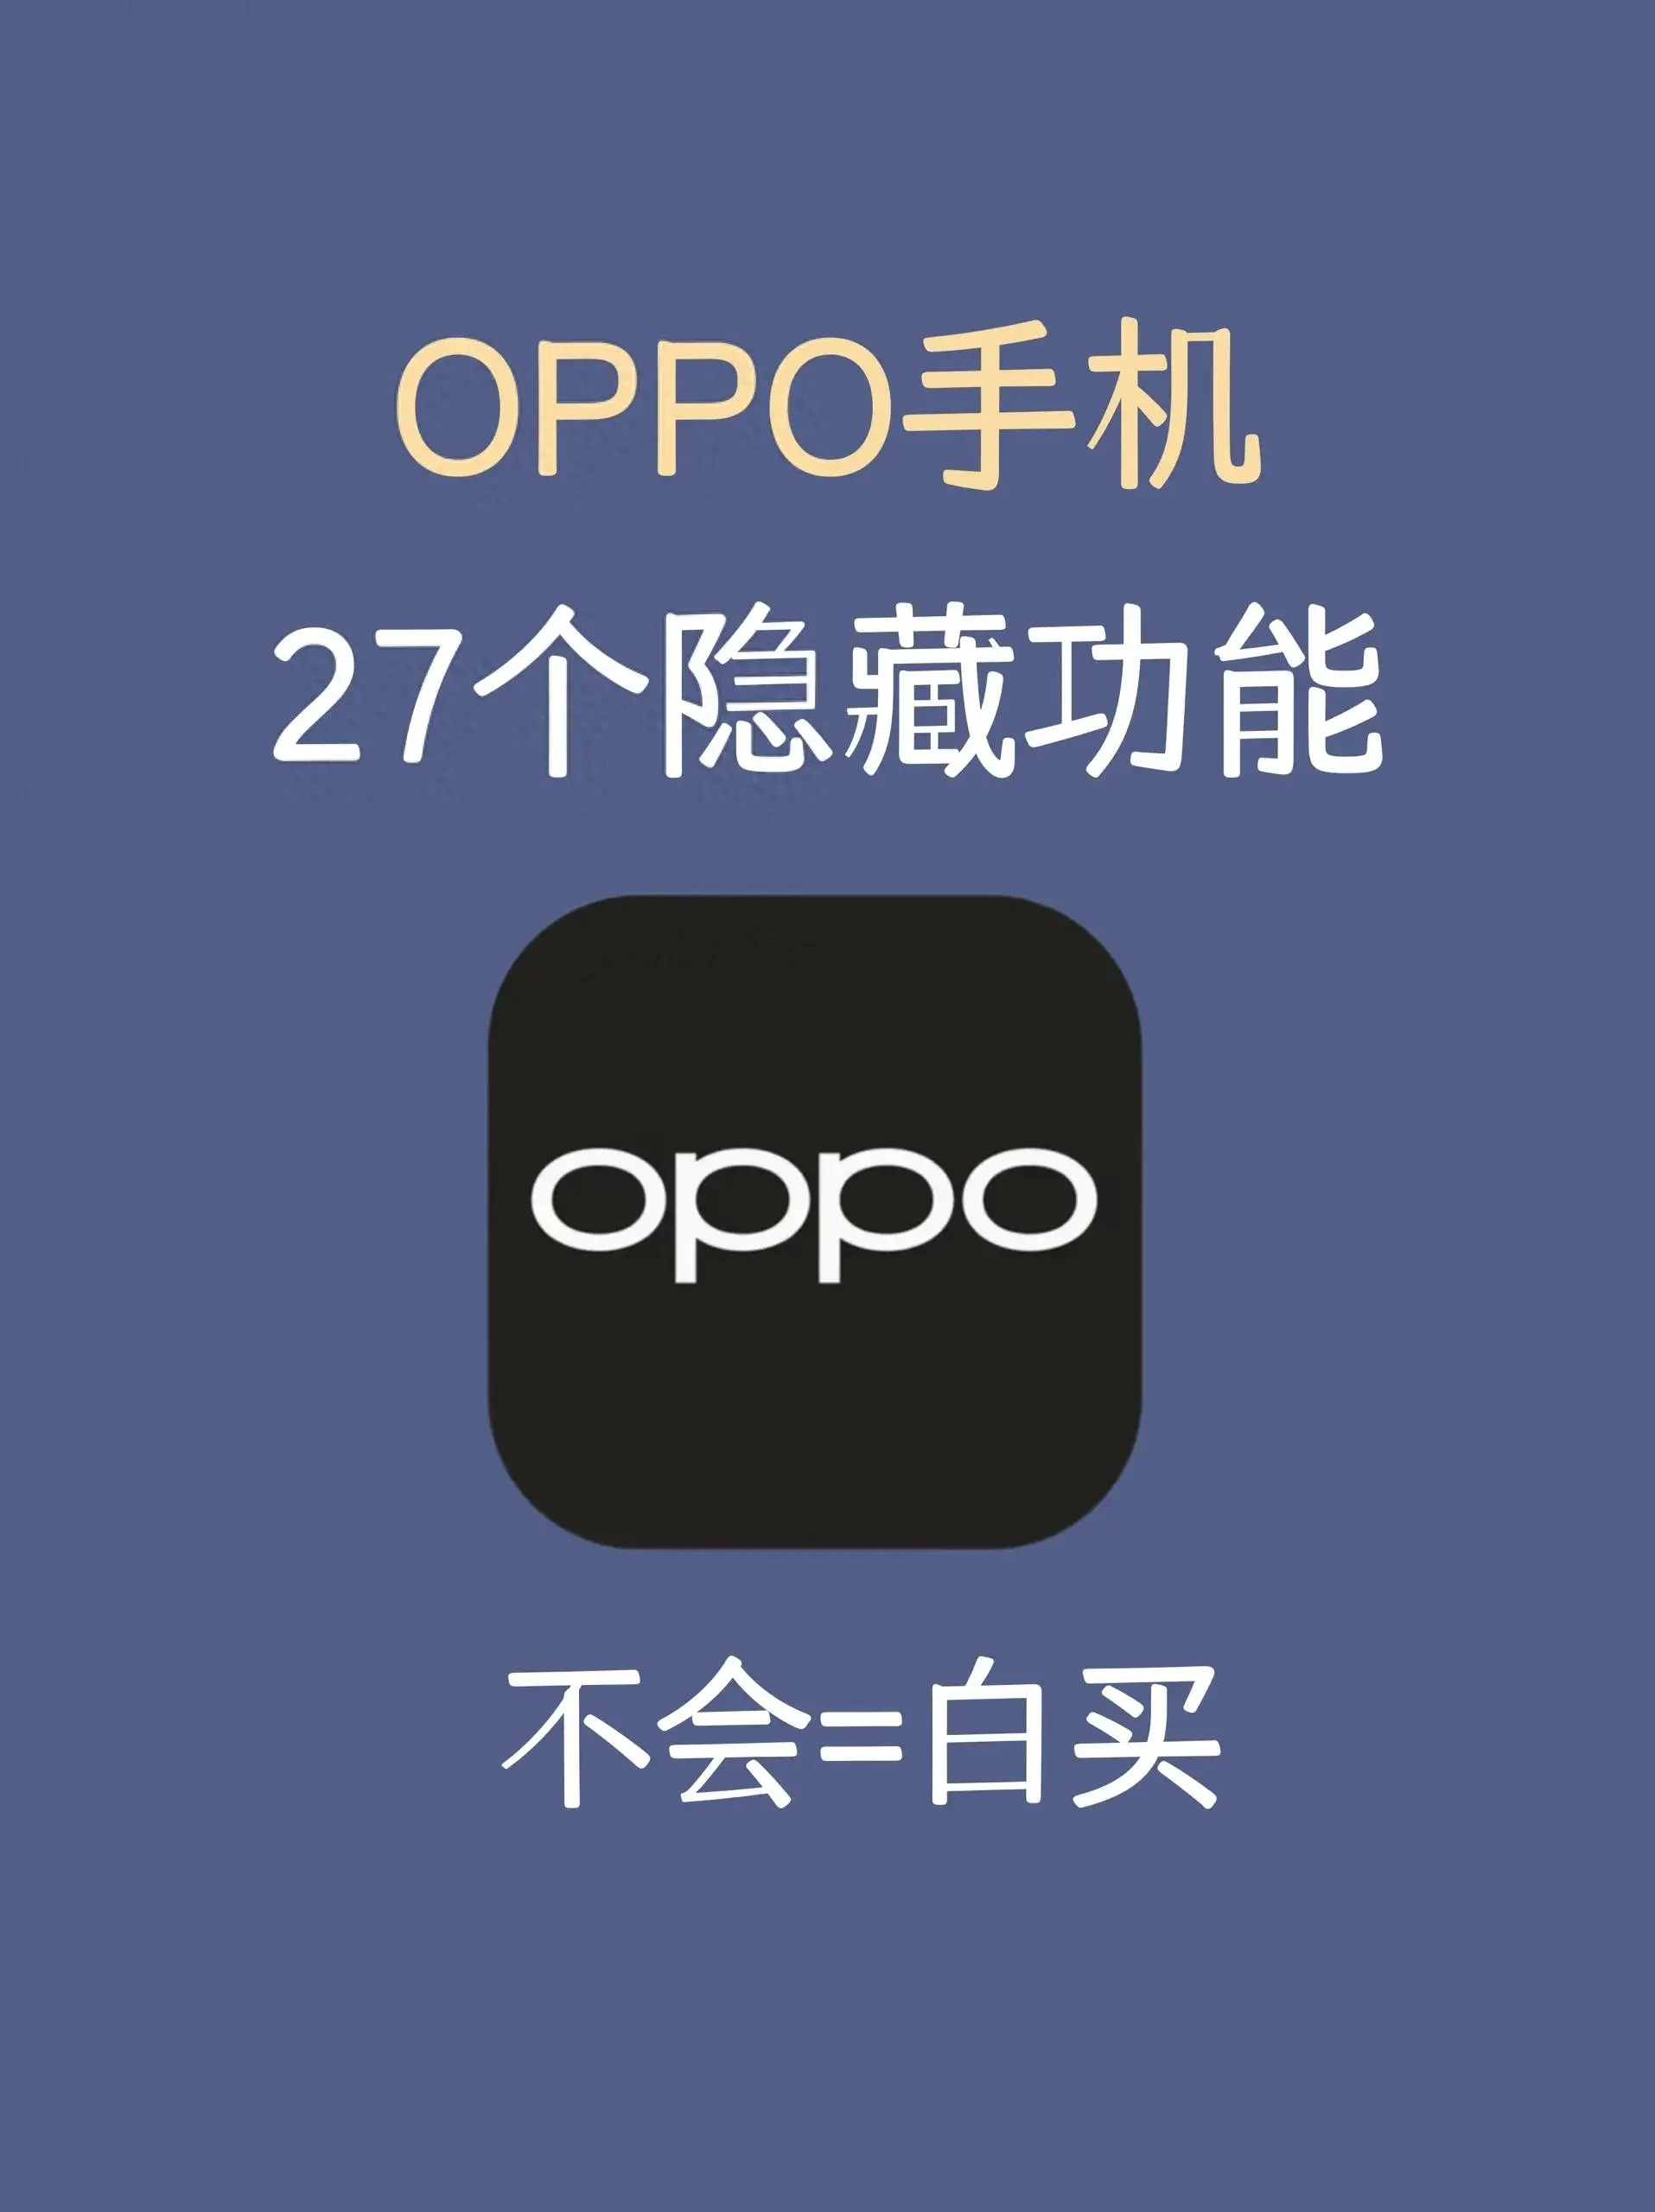 OPPO 手机系统 27 个隐藏功能，用 OPPO 手机的赶紧学起来